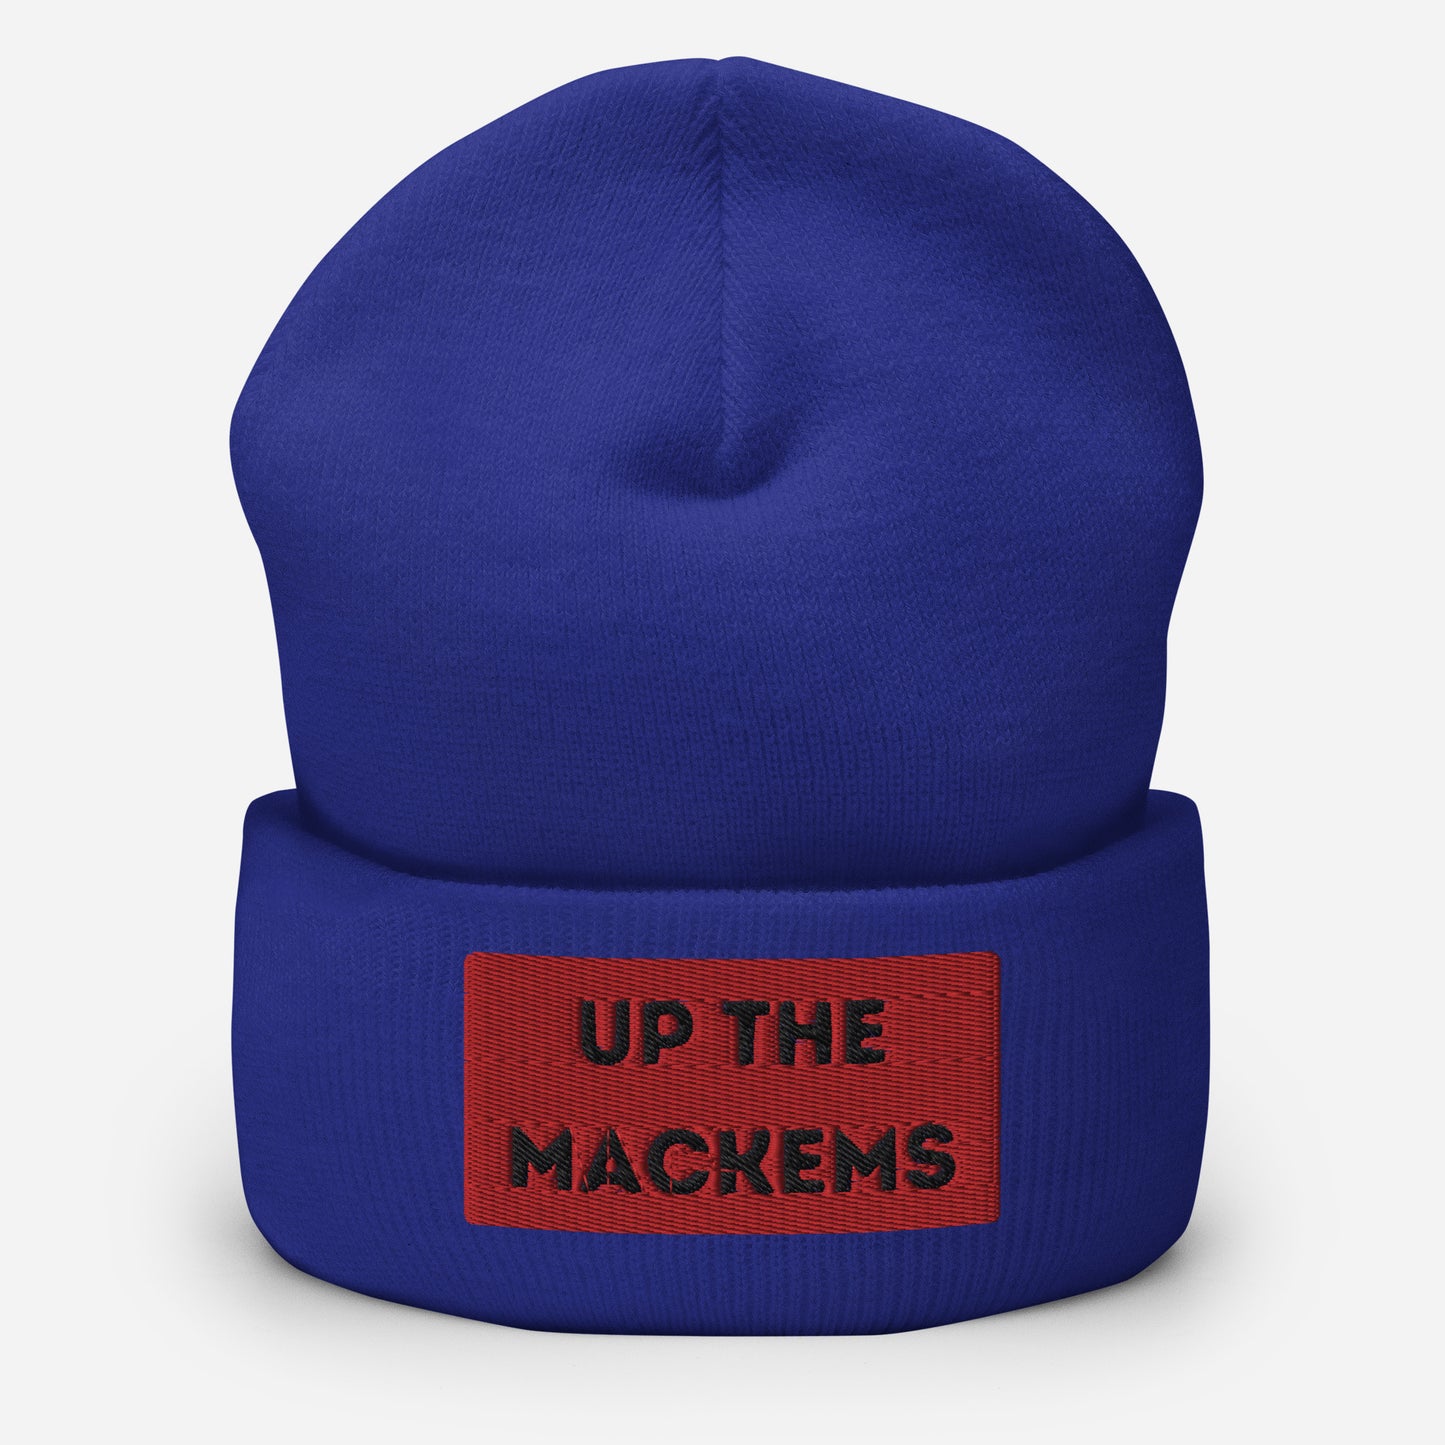 Up The Mackems Cuffed Beanie Hat